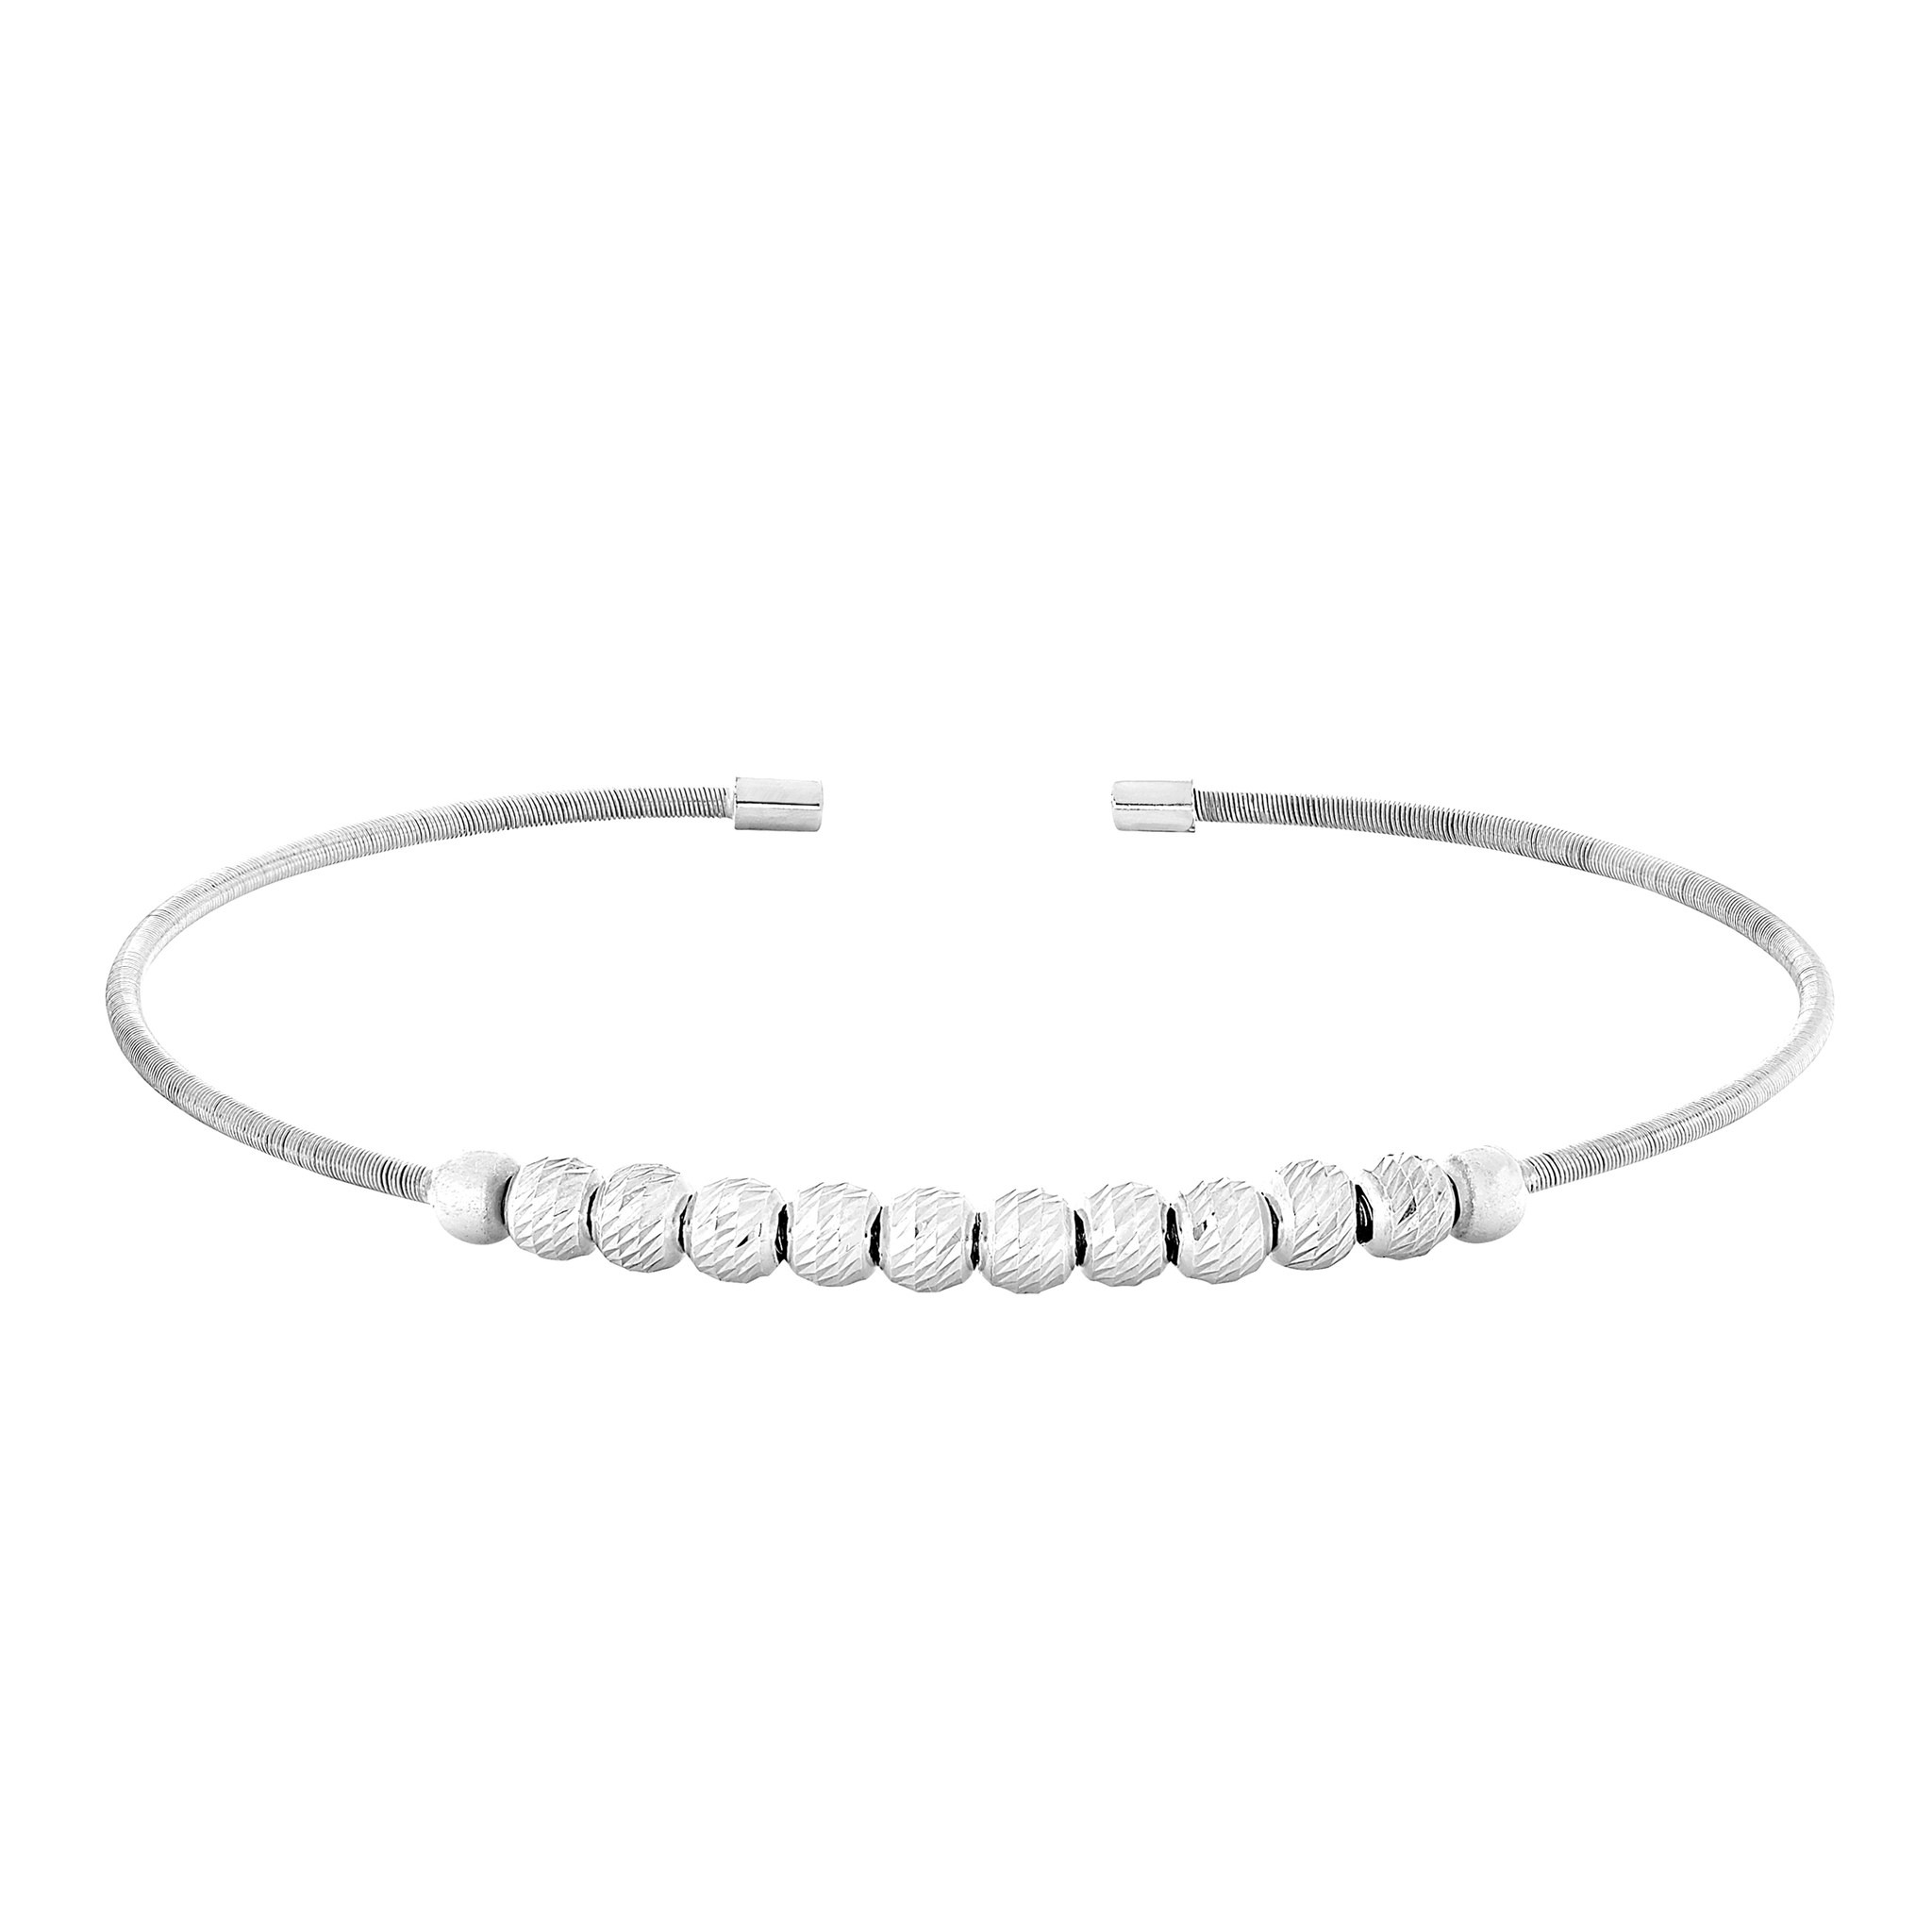 Rhodium Finish Sterling Silver Cable Cuff Bracelet w/Ten Diamond Cut Spinning Beads